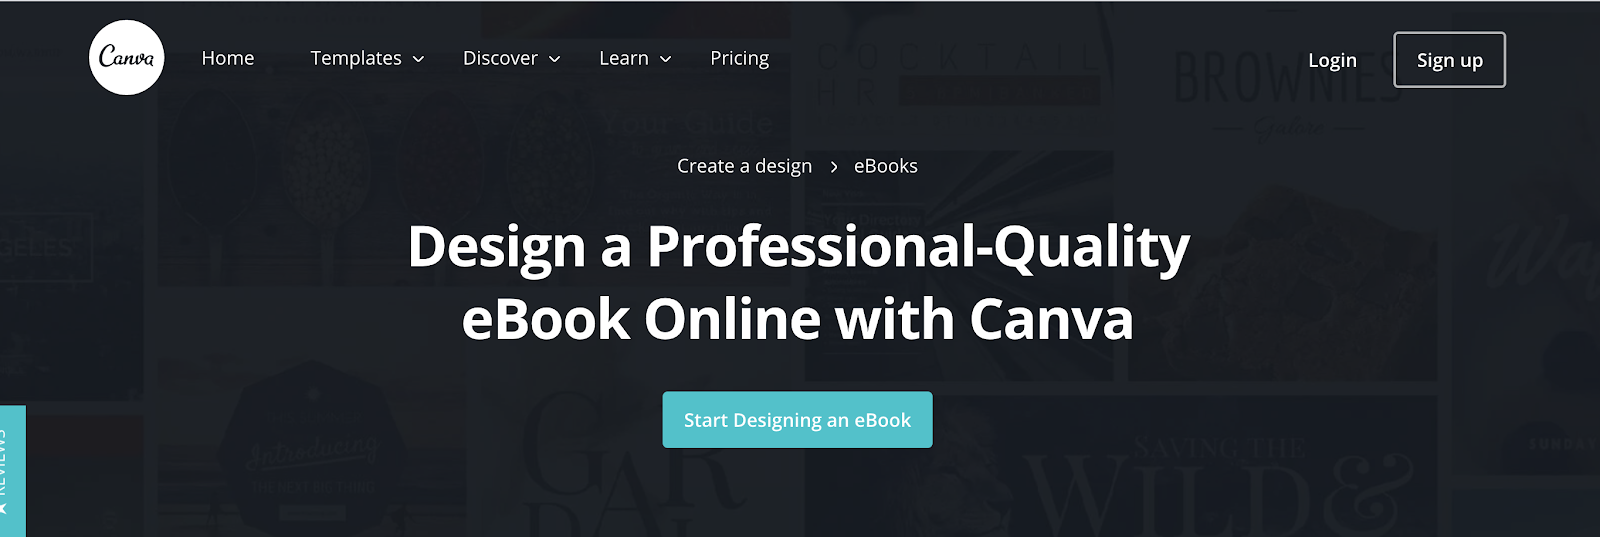 Canva Homepage Screenshot (eBook Designer Tool)